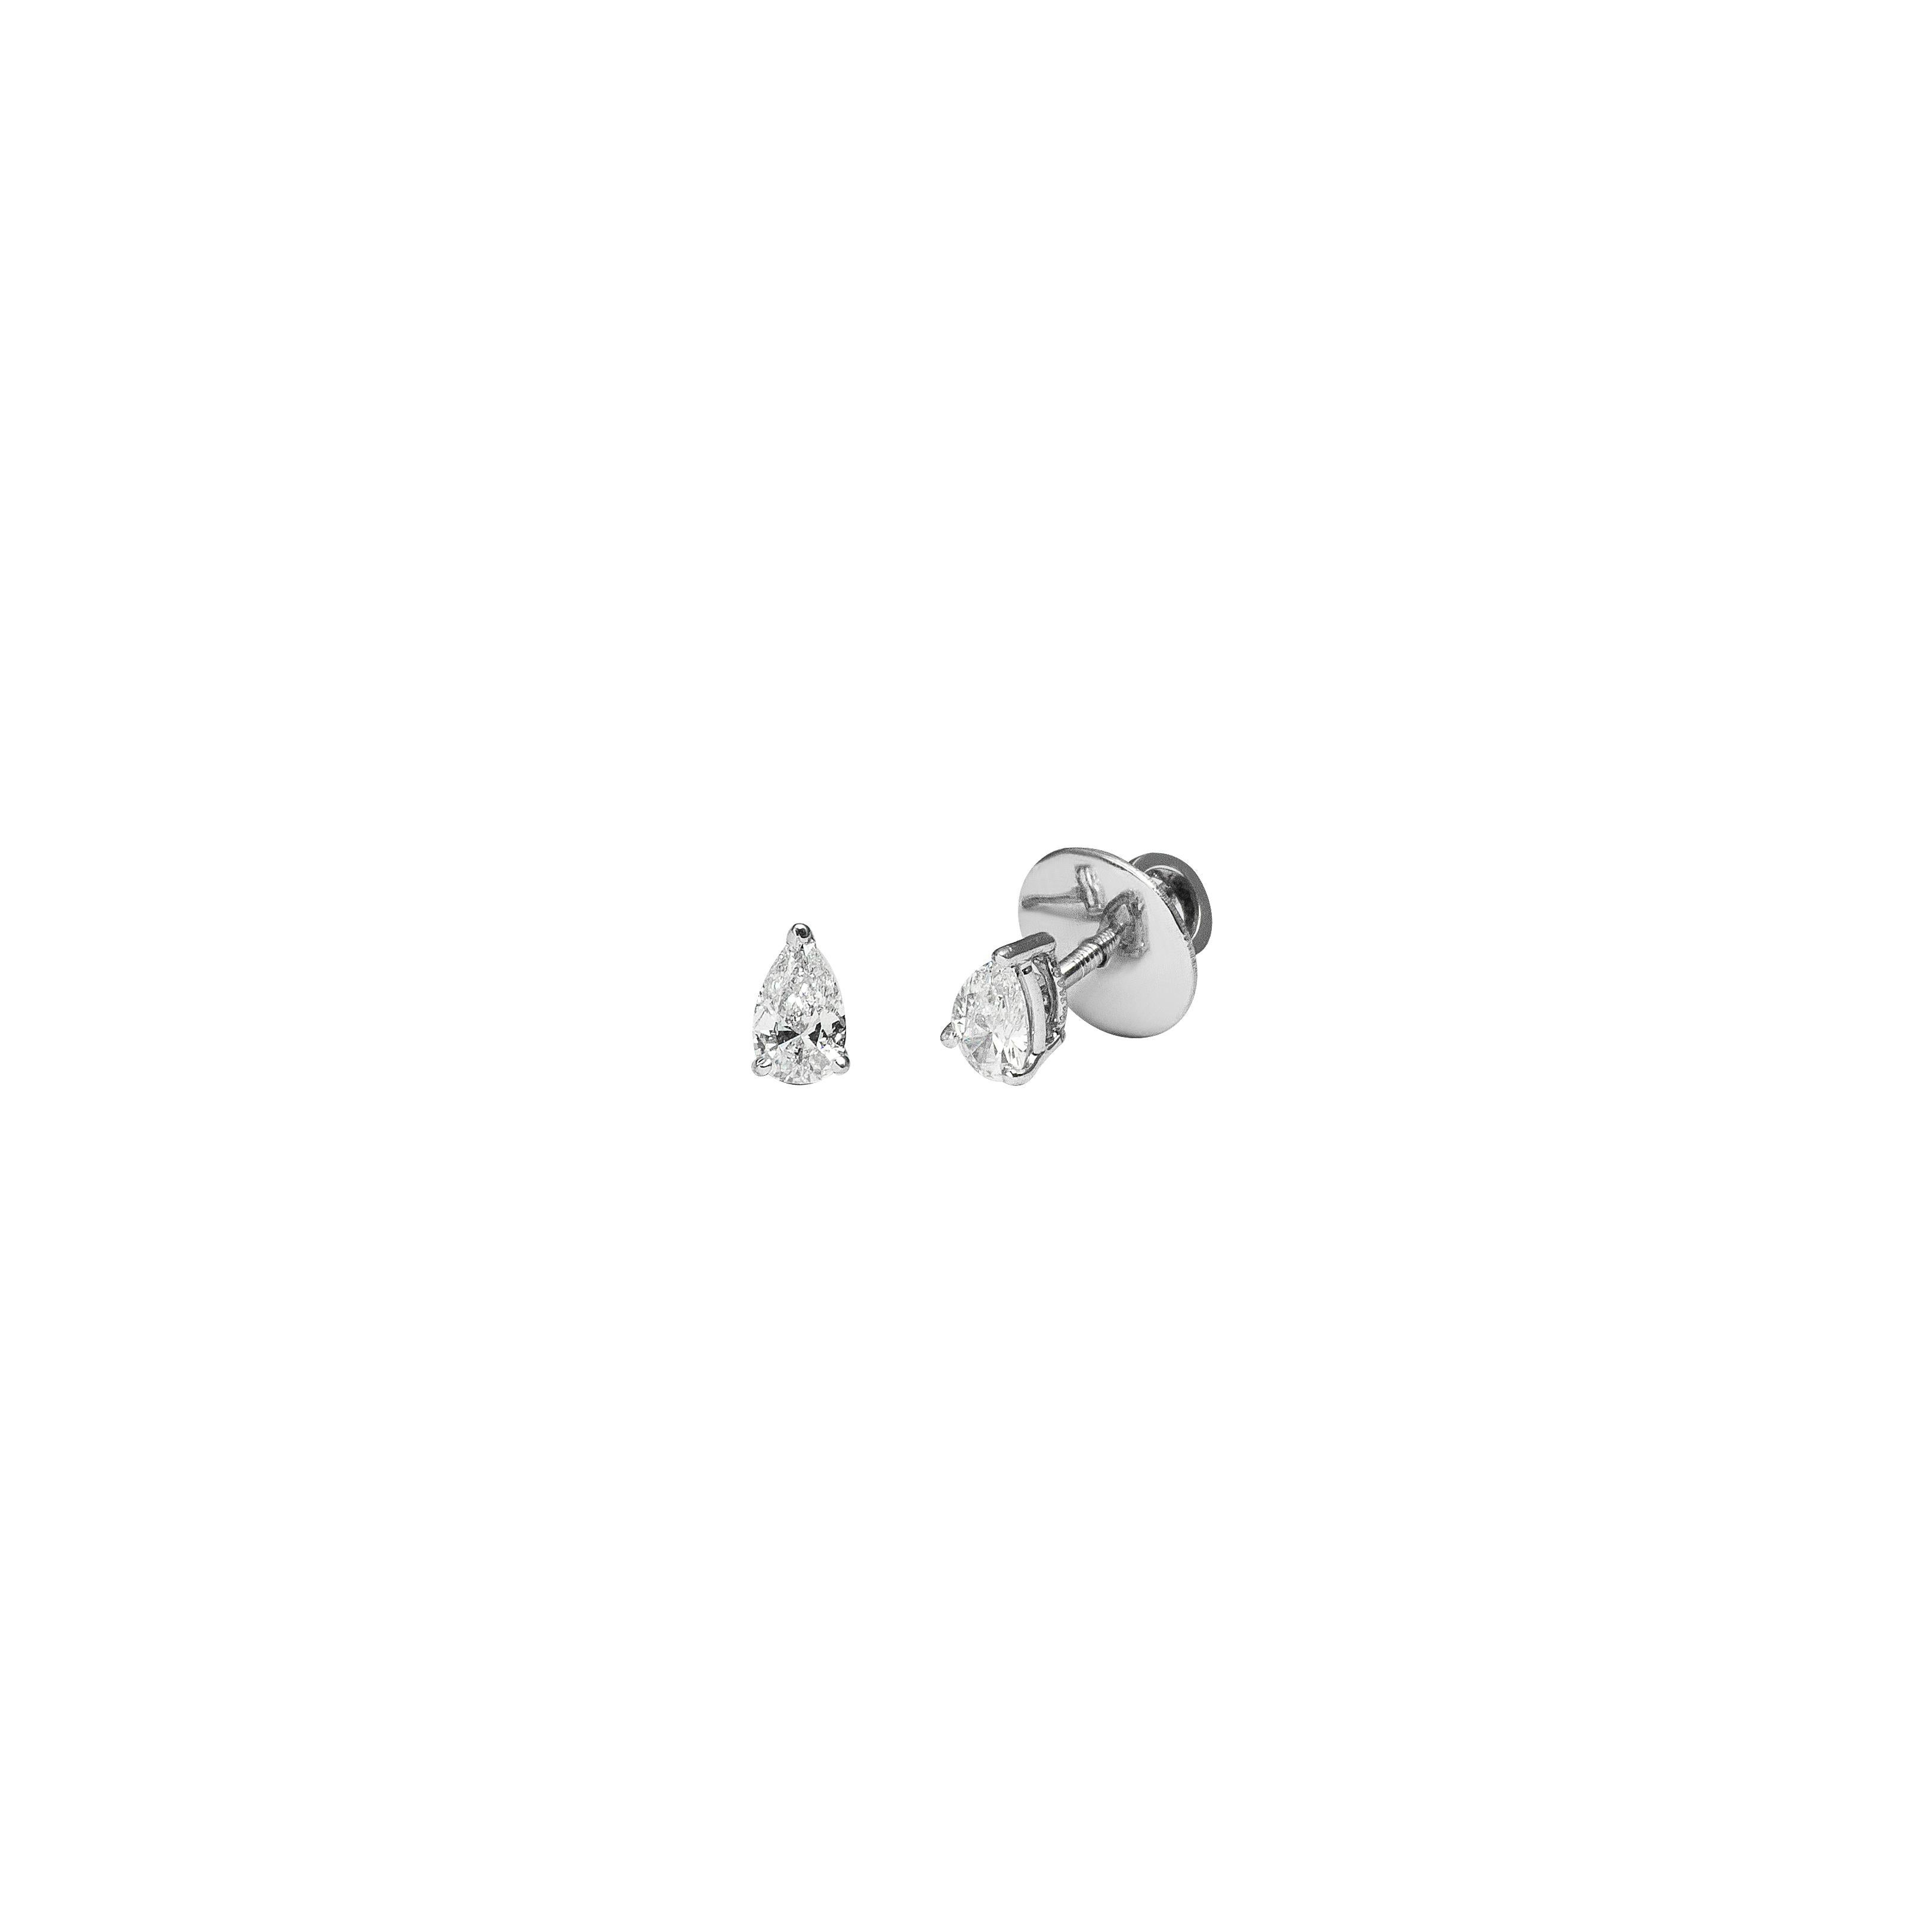 Pair of 18 Karat White Gold Pear Shape Diamond Earstuds

This simple and classic pair of 18 Karat white gold pear shape diamond earstuds are ideal for everyday wear. 

18 Karat White Gold - 2.154 gms
Diamonds - 0.48 cts